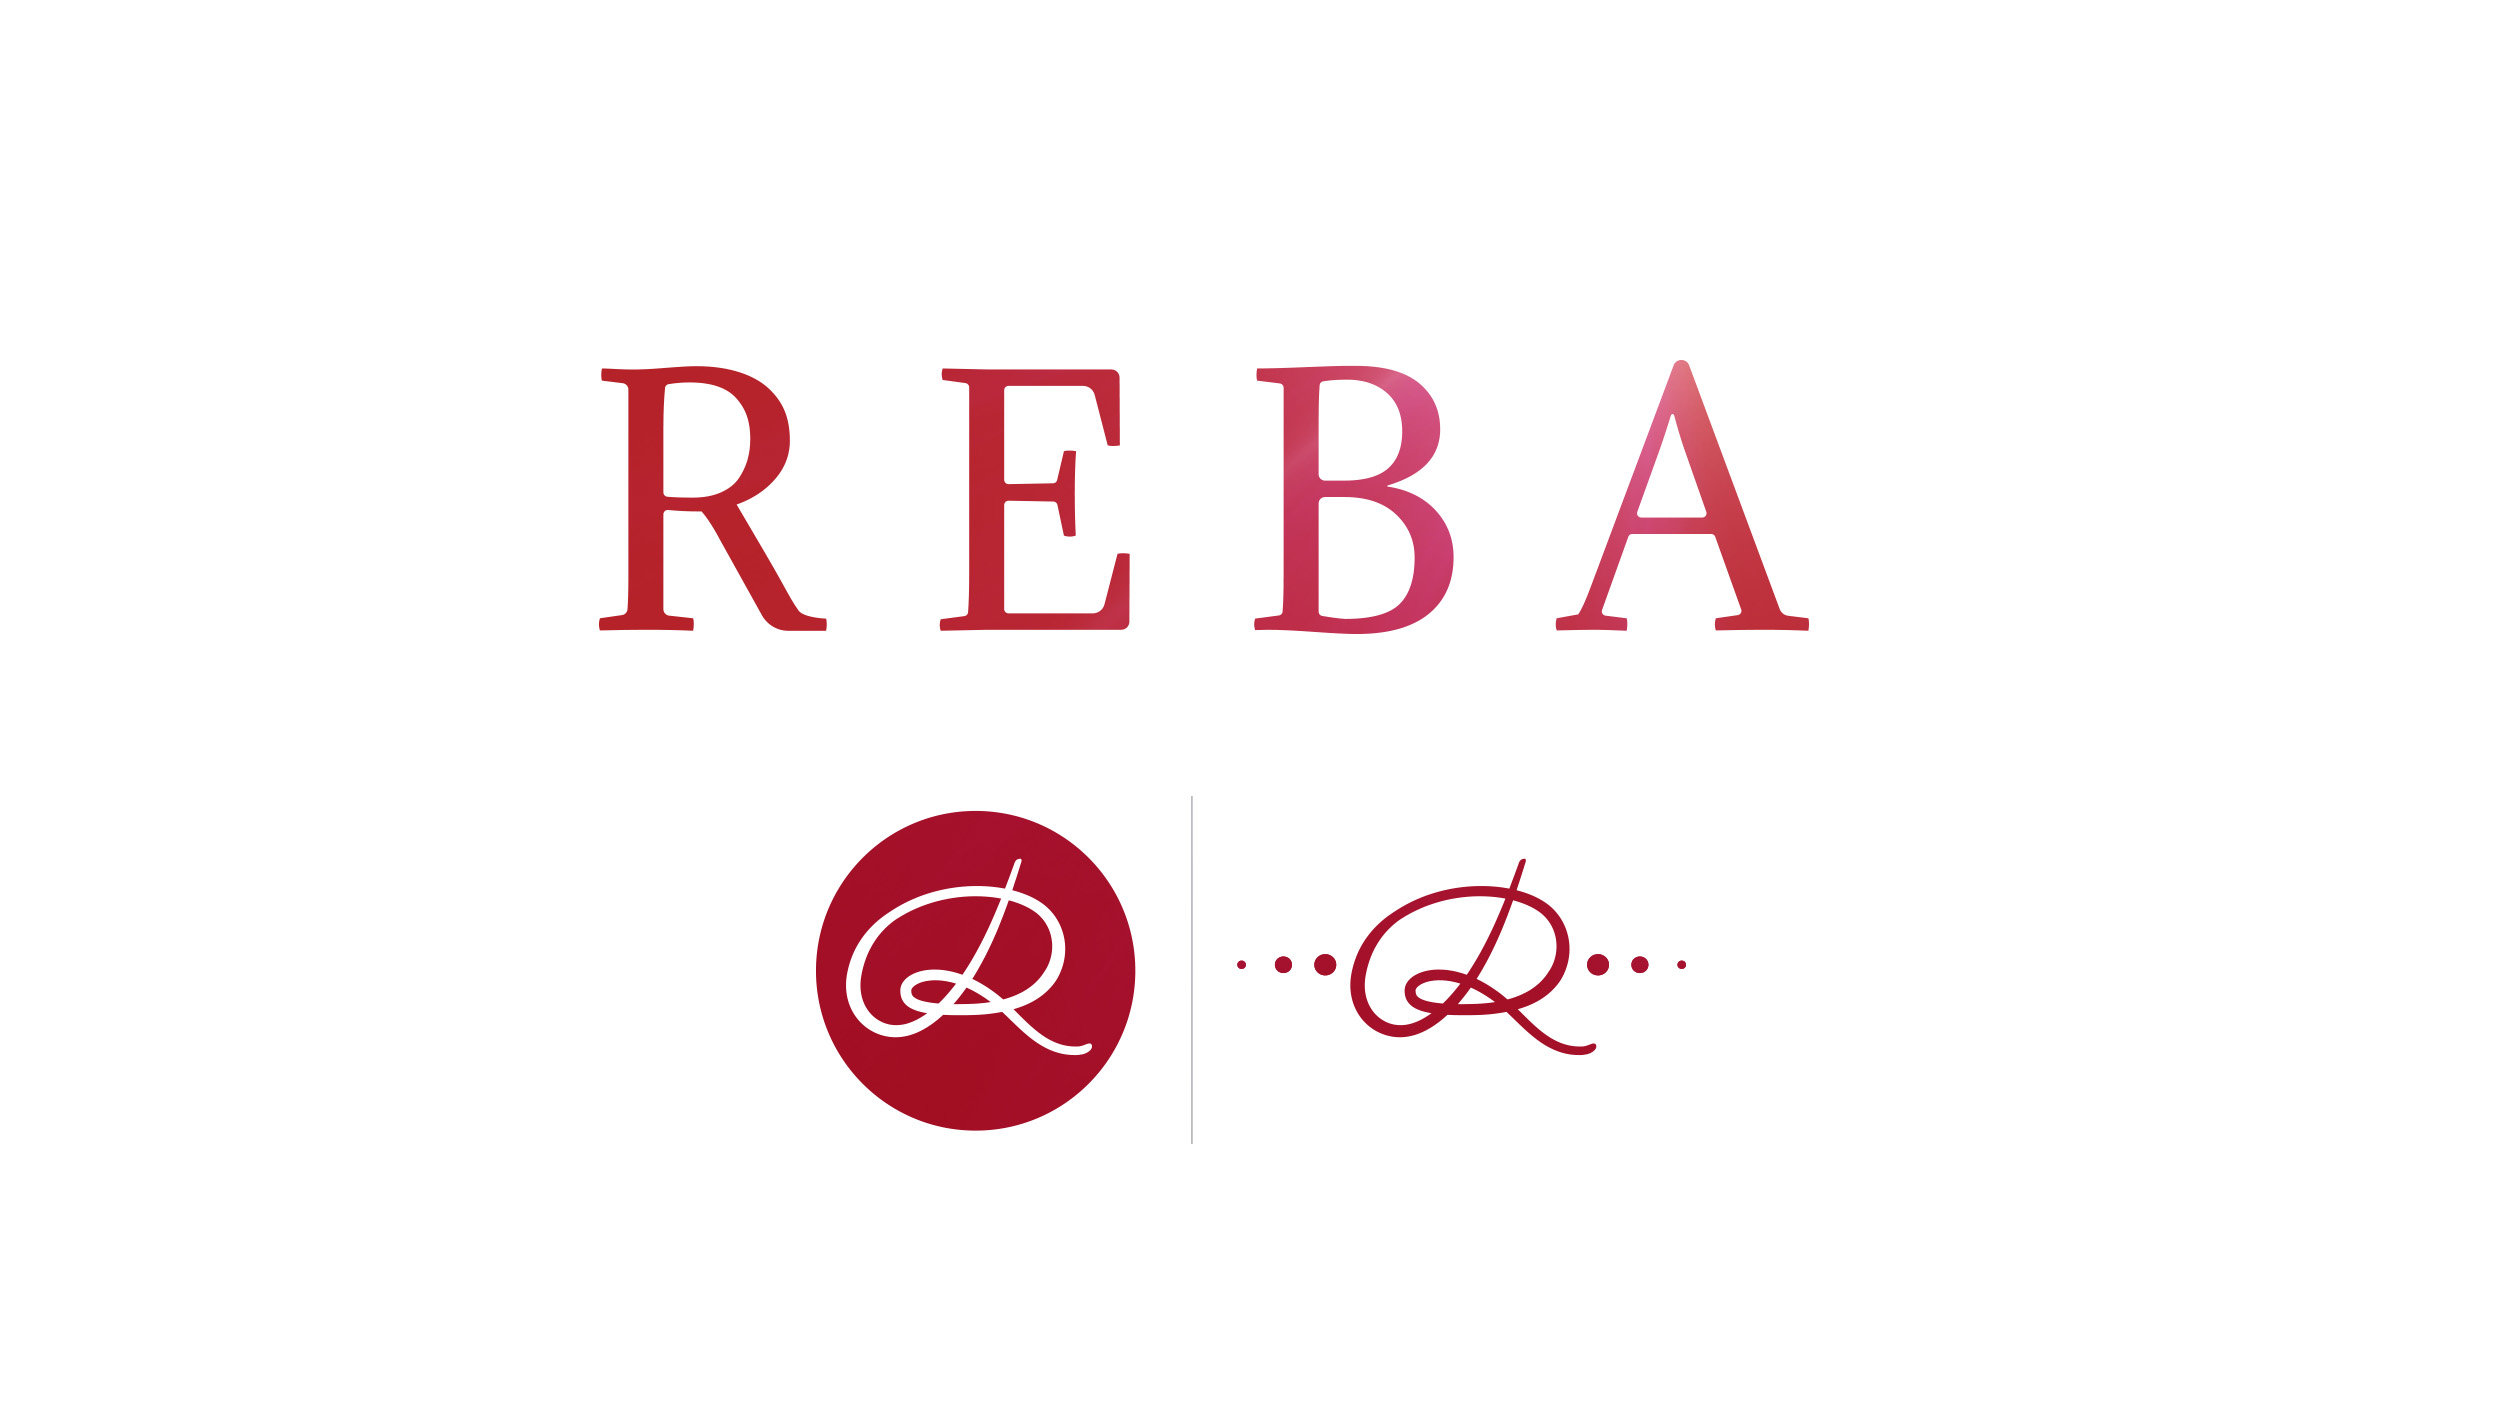 Reba type treatment and signature 'R' logo mark.